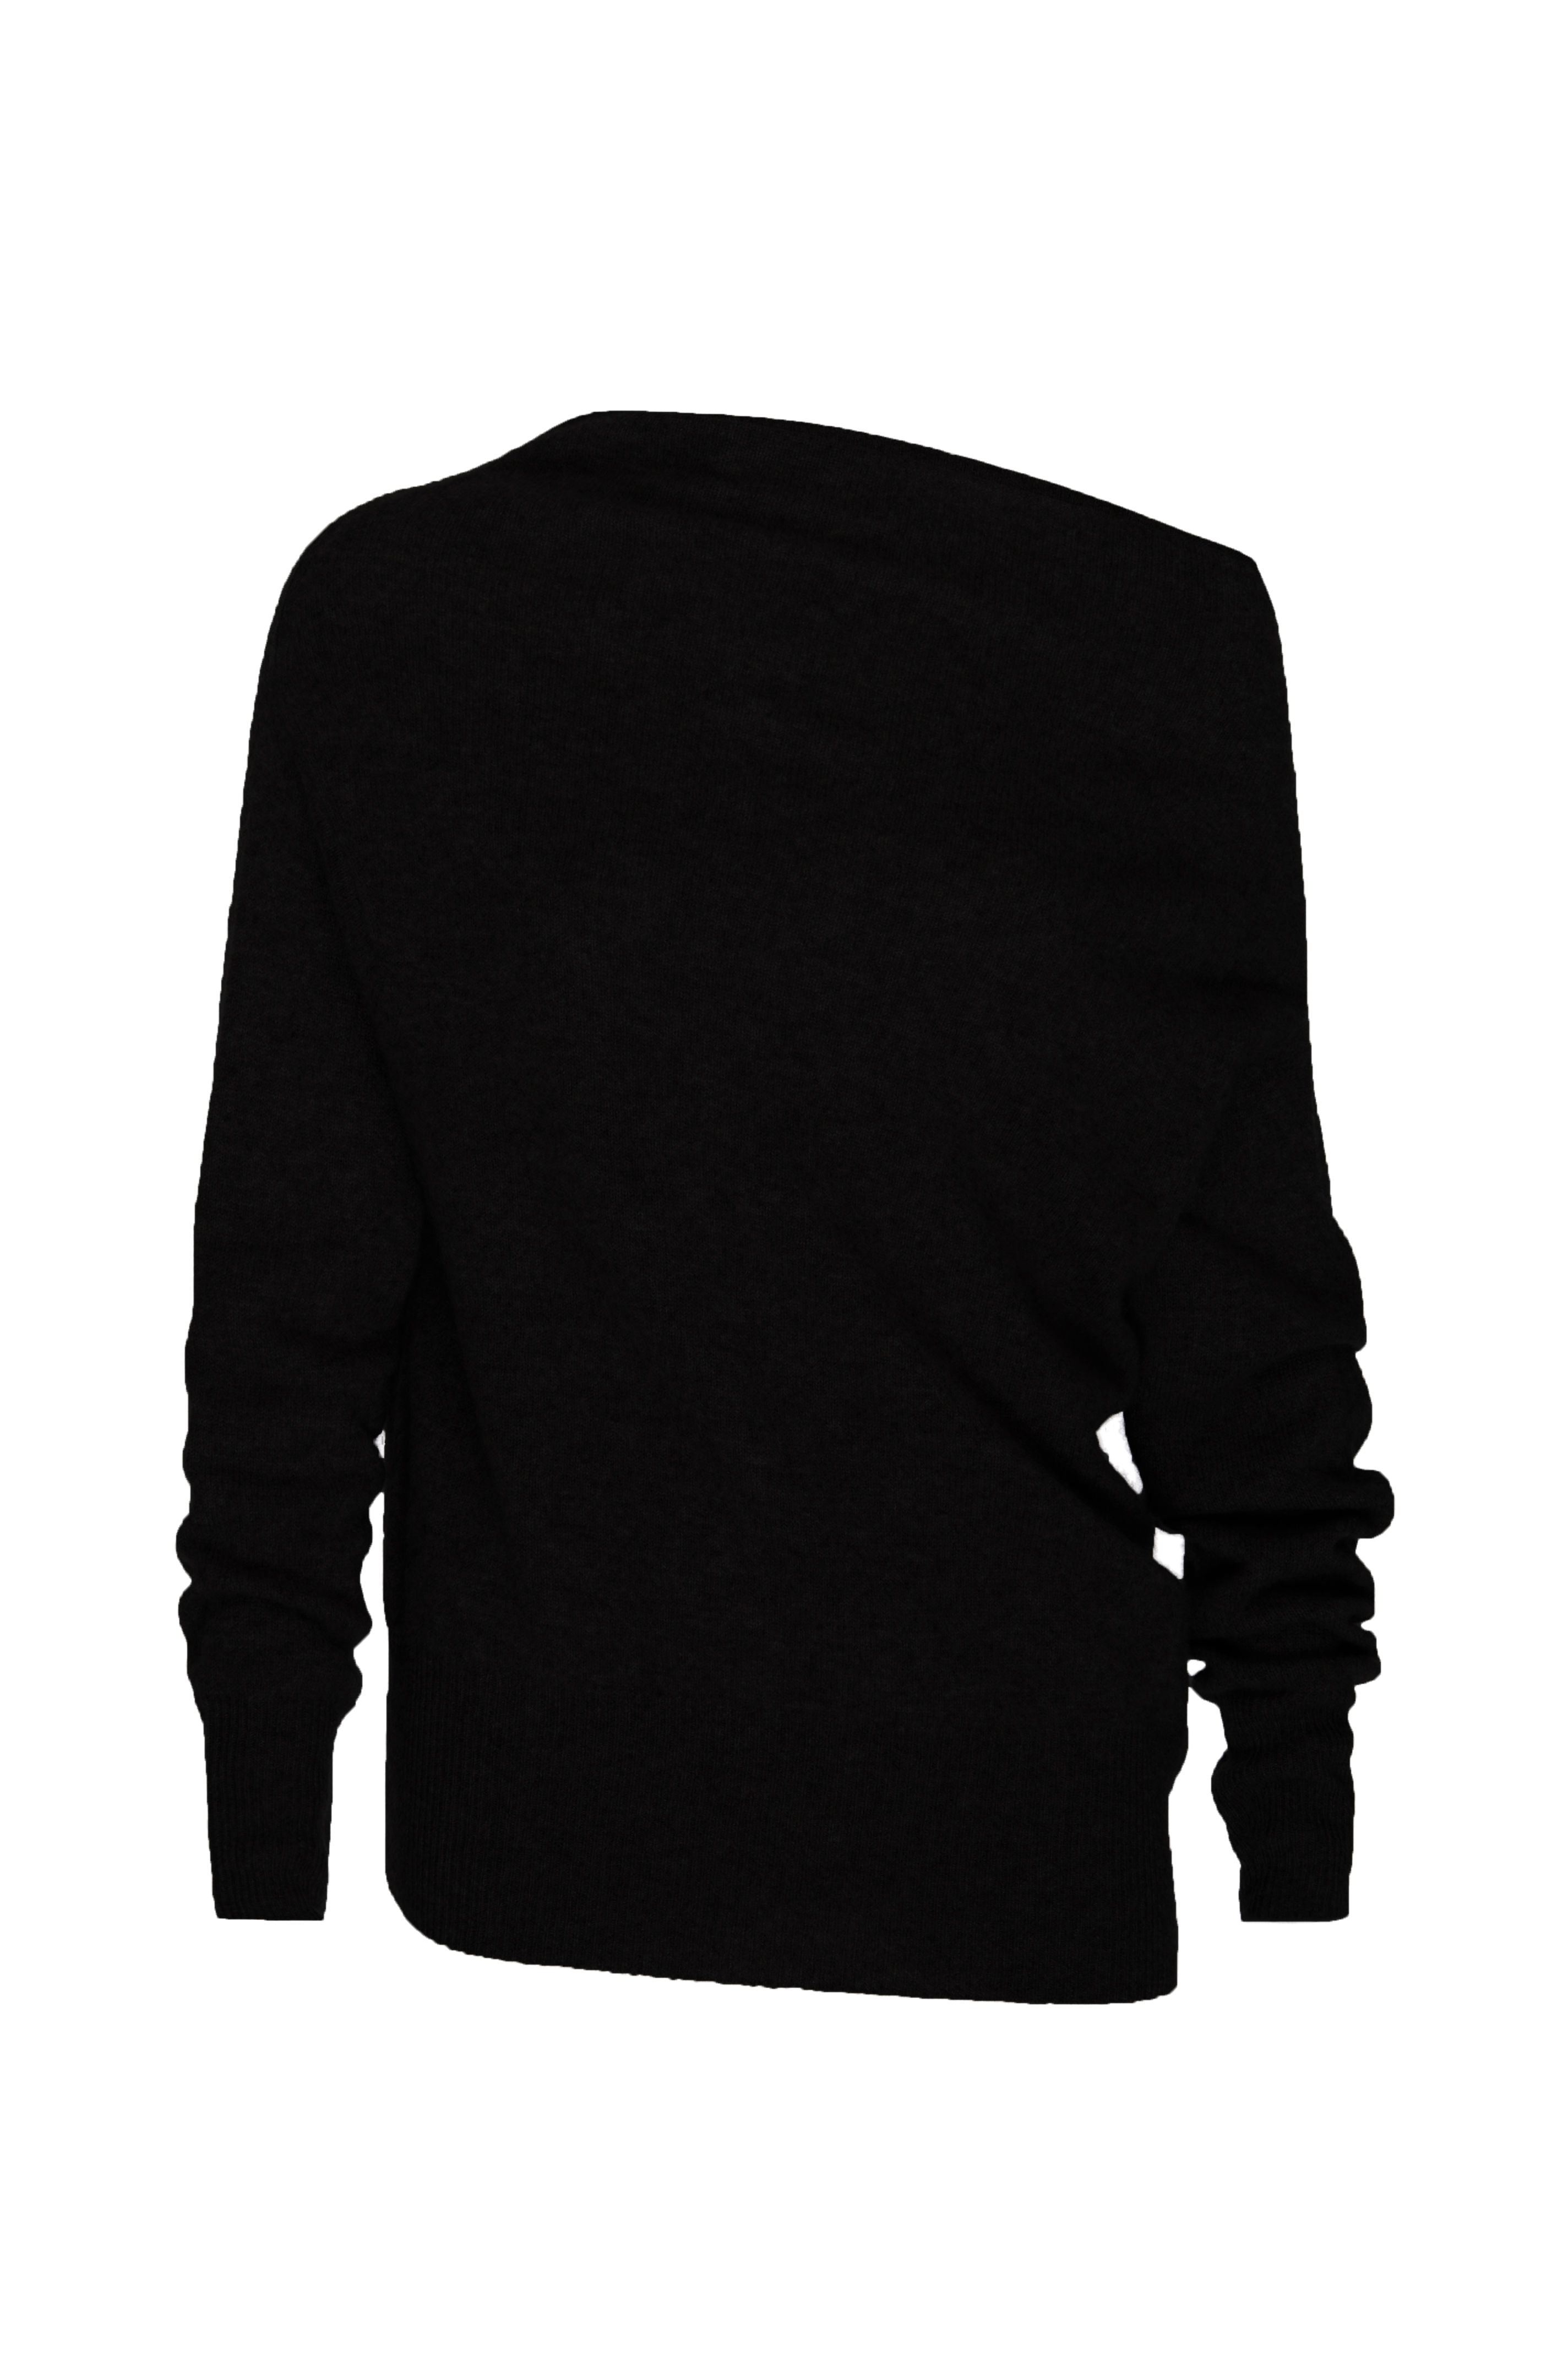 Lori cashmere off shoulder black sweater flat view